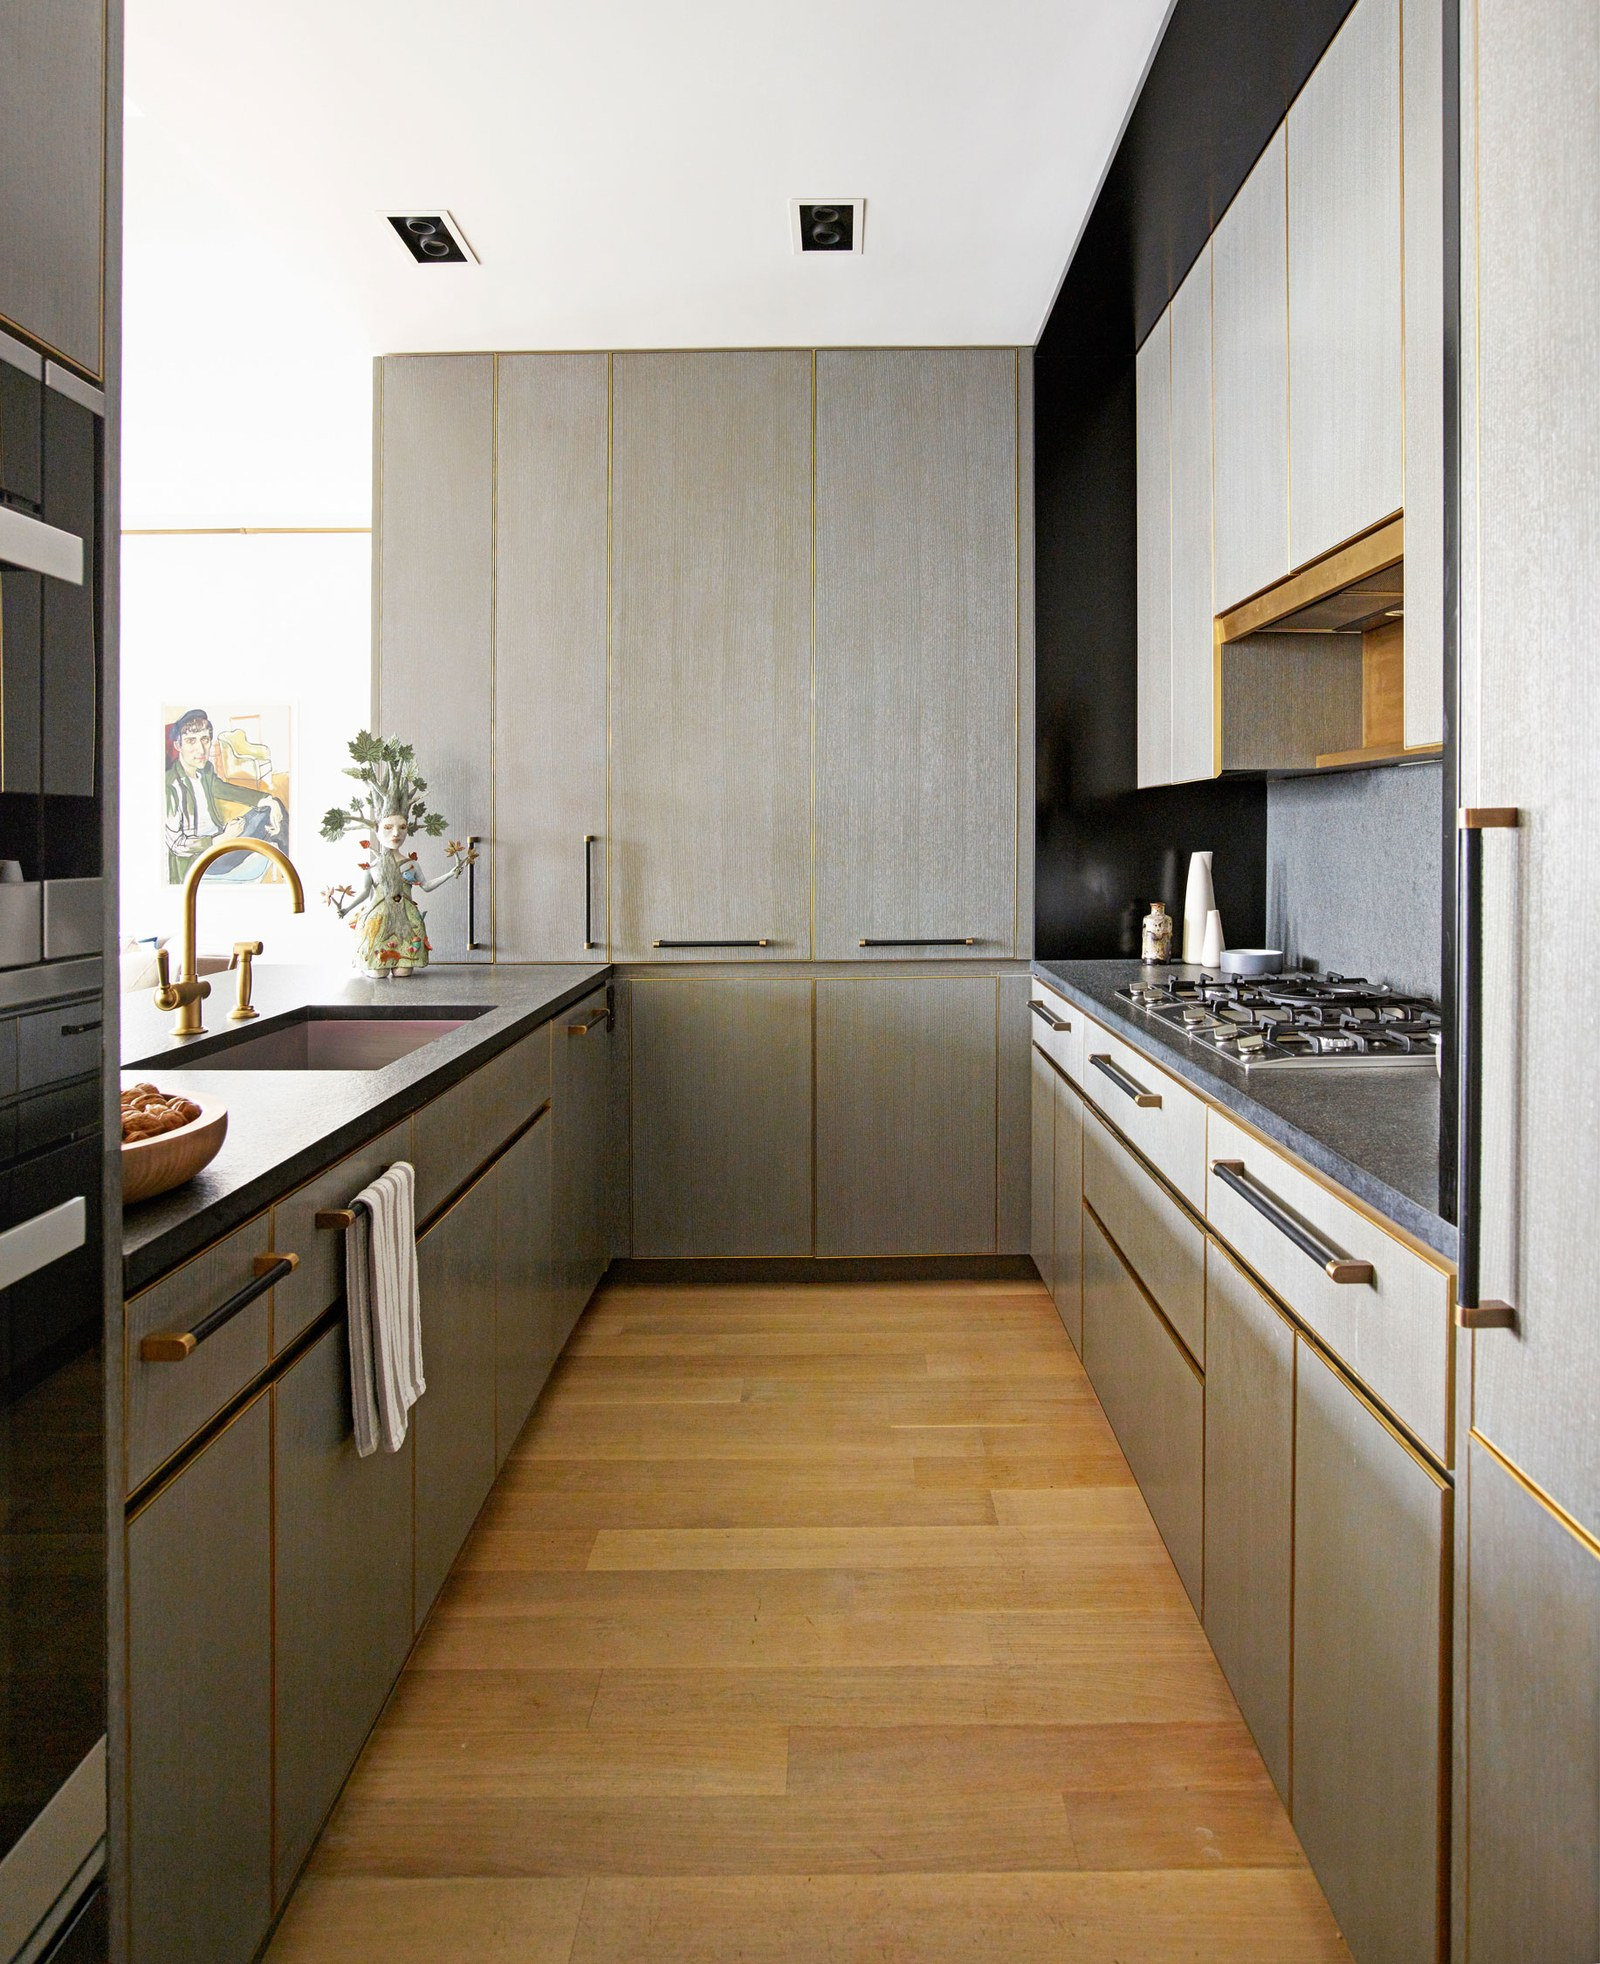 10 Elegant Kitchen Ideas For A Small Kitchen the best small kitchen design ideas for your tiny space 1 2023